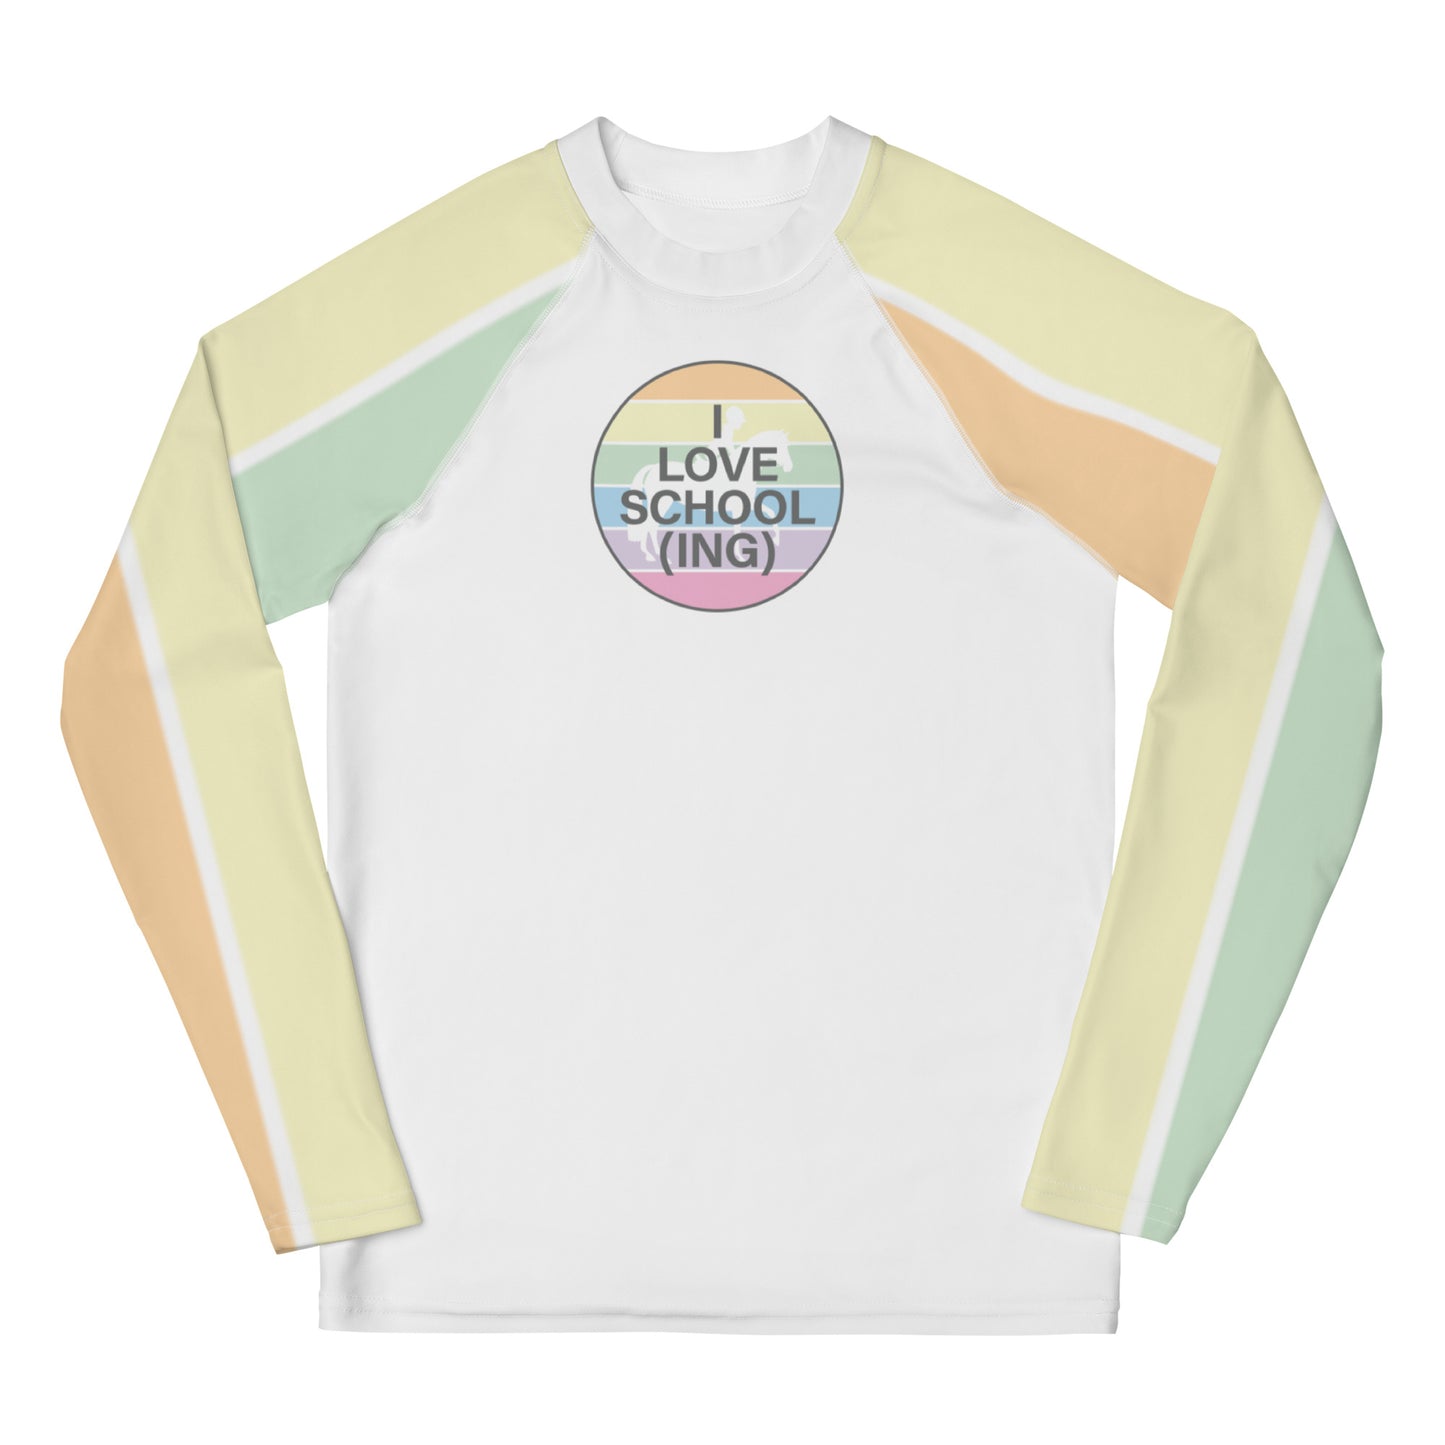 Youth Long-Sleeved Sun Shirt "I LOVE SCHOOLING" in Frozen Lemonade, Peach Creamsicle & Sour Apple